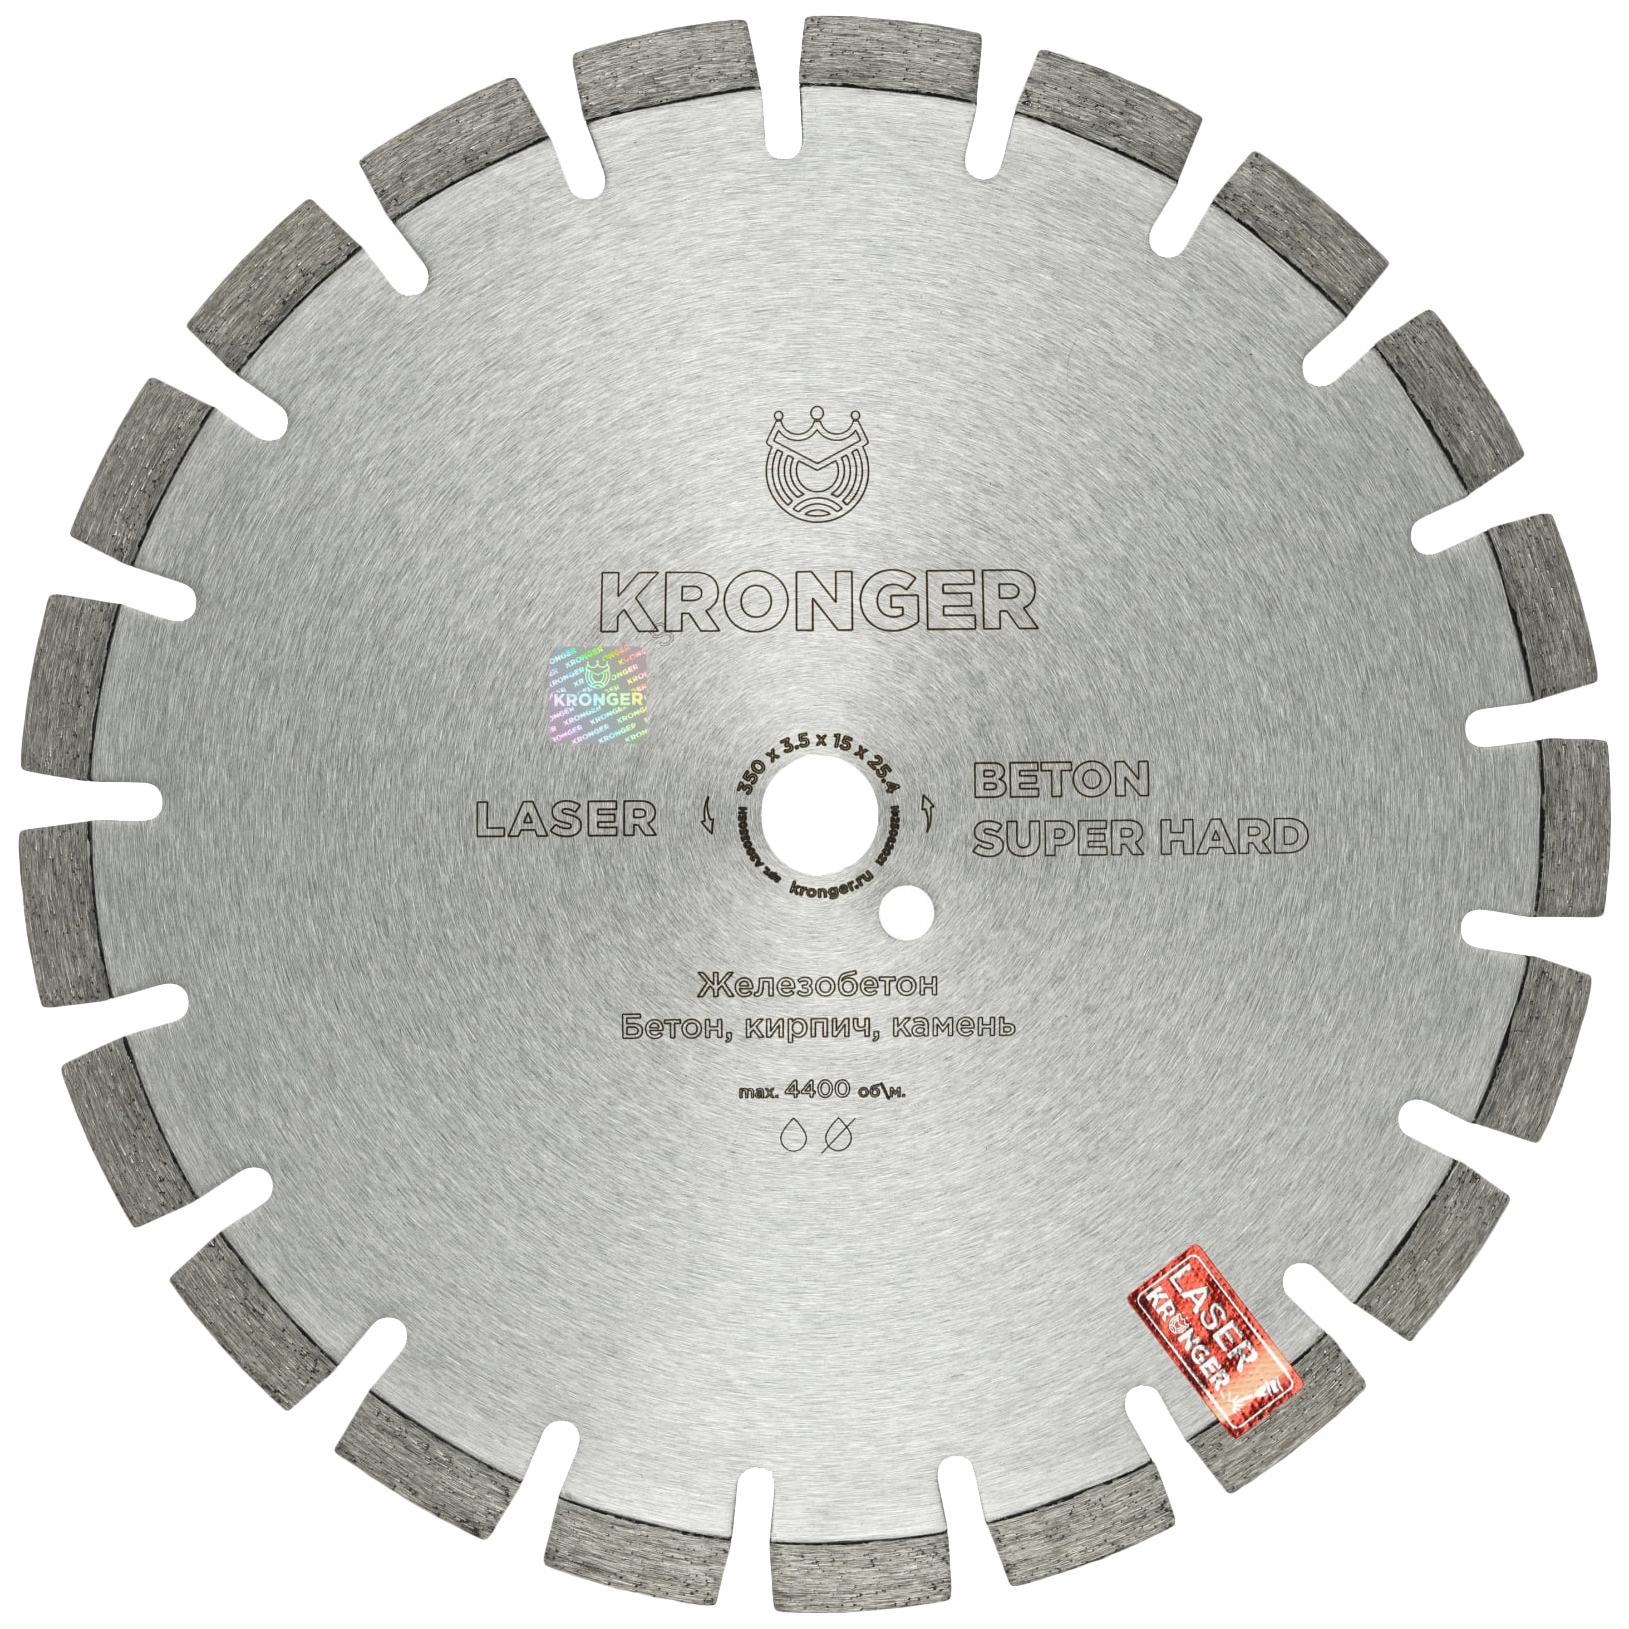 фото Kronger алмазный сегментный диск по армированному бетону 350x3.5х15х25.4/20.0 мм beton sup